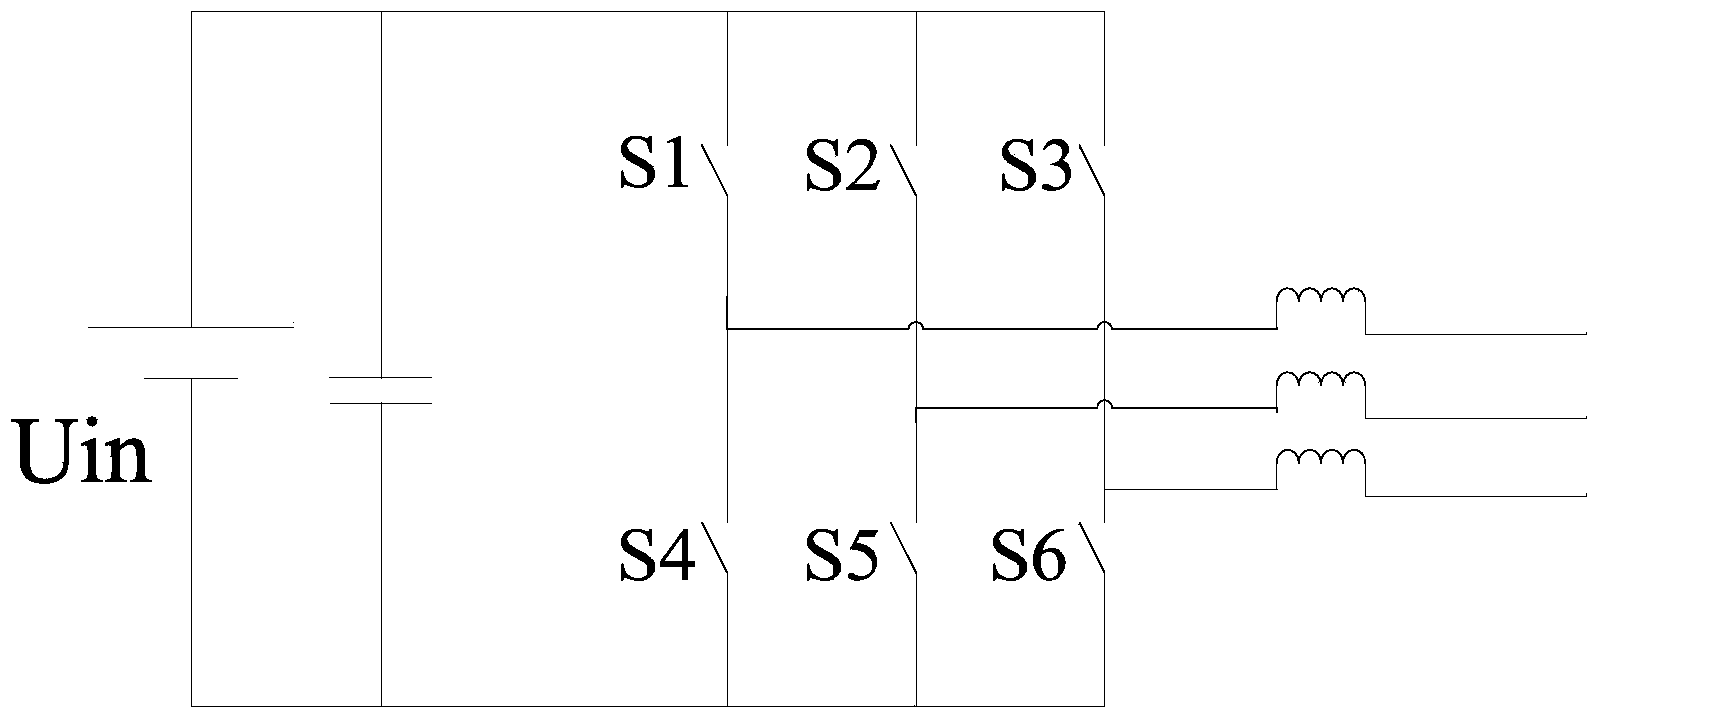 Single-stage inverter